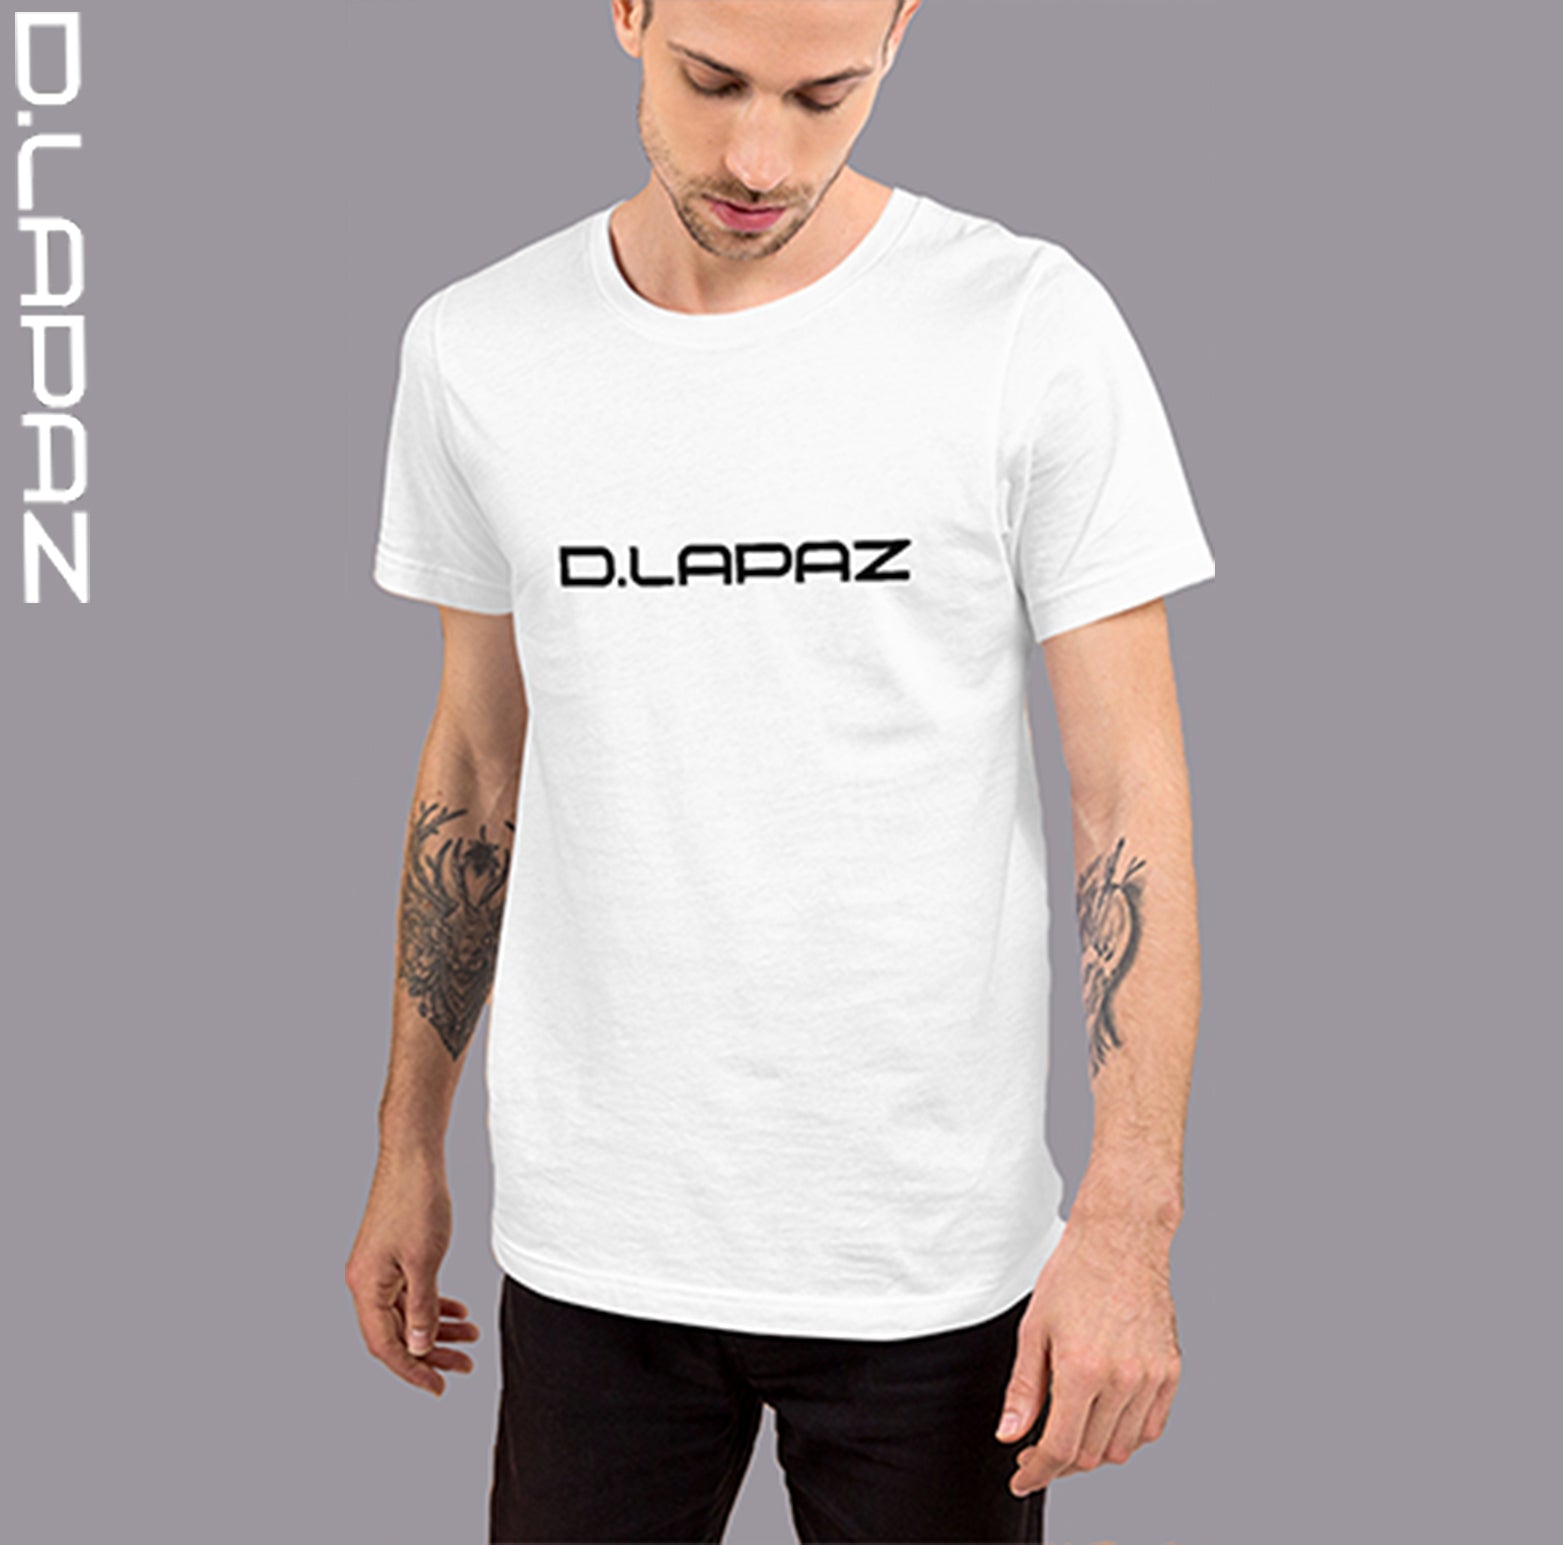 D.LAPAZ - Short-Sleeve Unisex T-Shirt